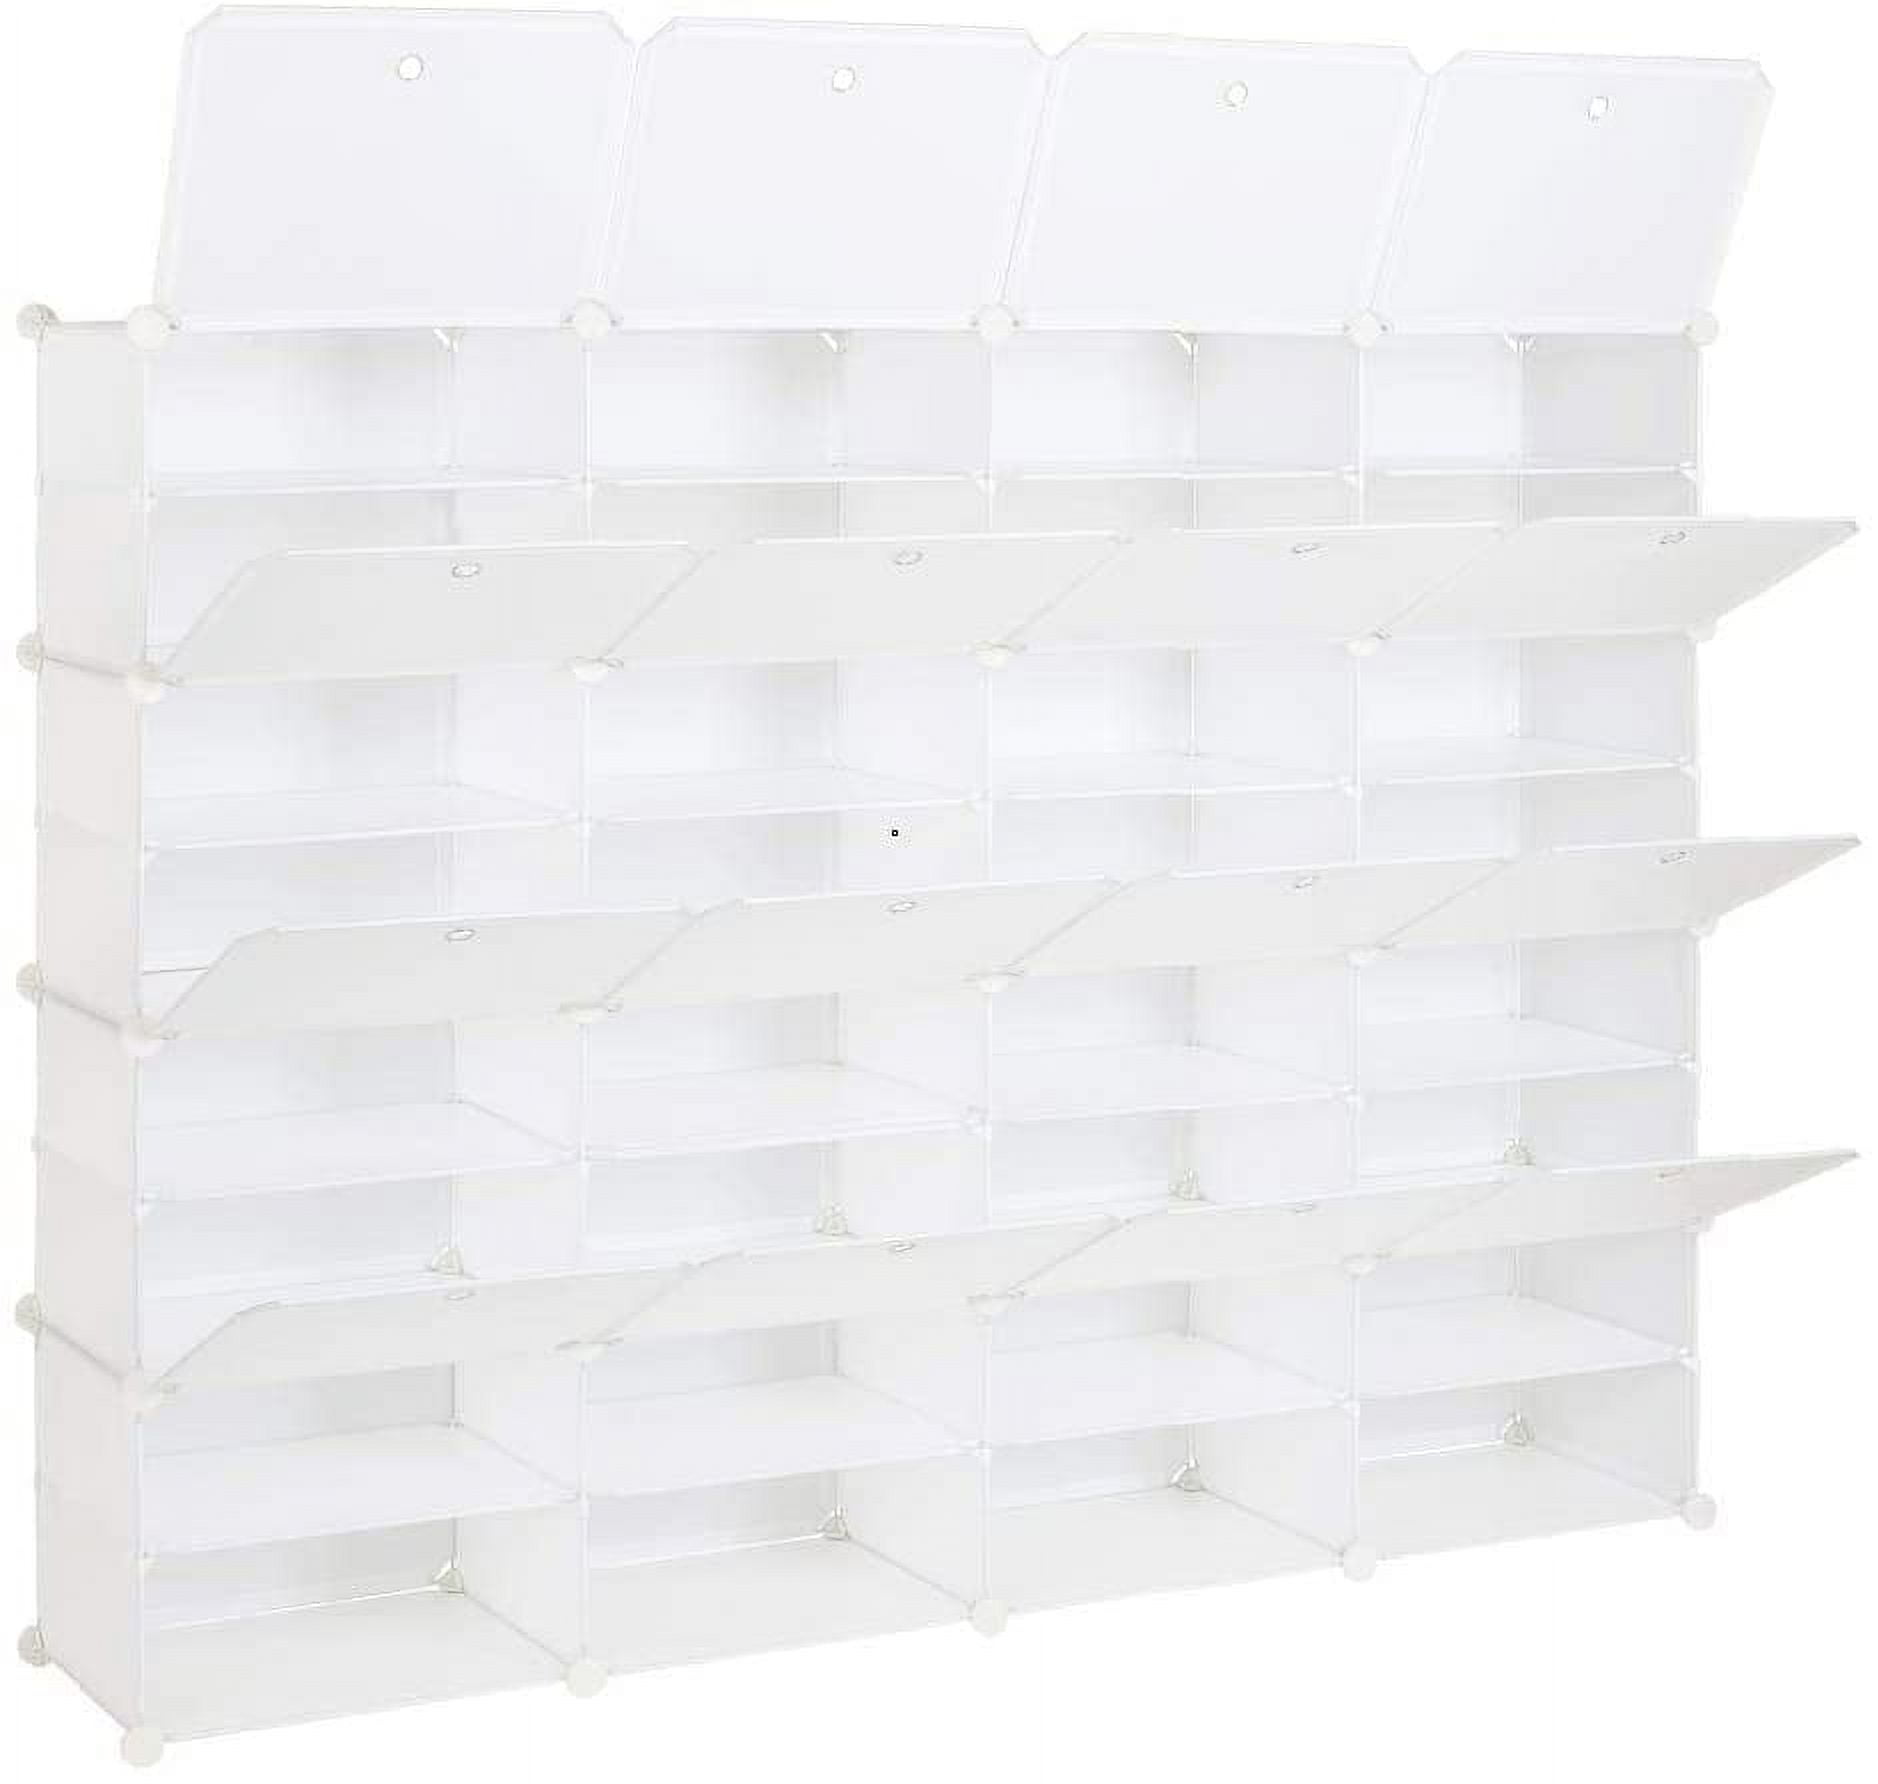 XUANIIIL Portable Shoe Rack Organizer with Door, 72 Pairs Shoe Storage  Modular Cabinet, Plastic Adjustable Box Shelves Stackable Detachable DIY